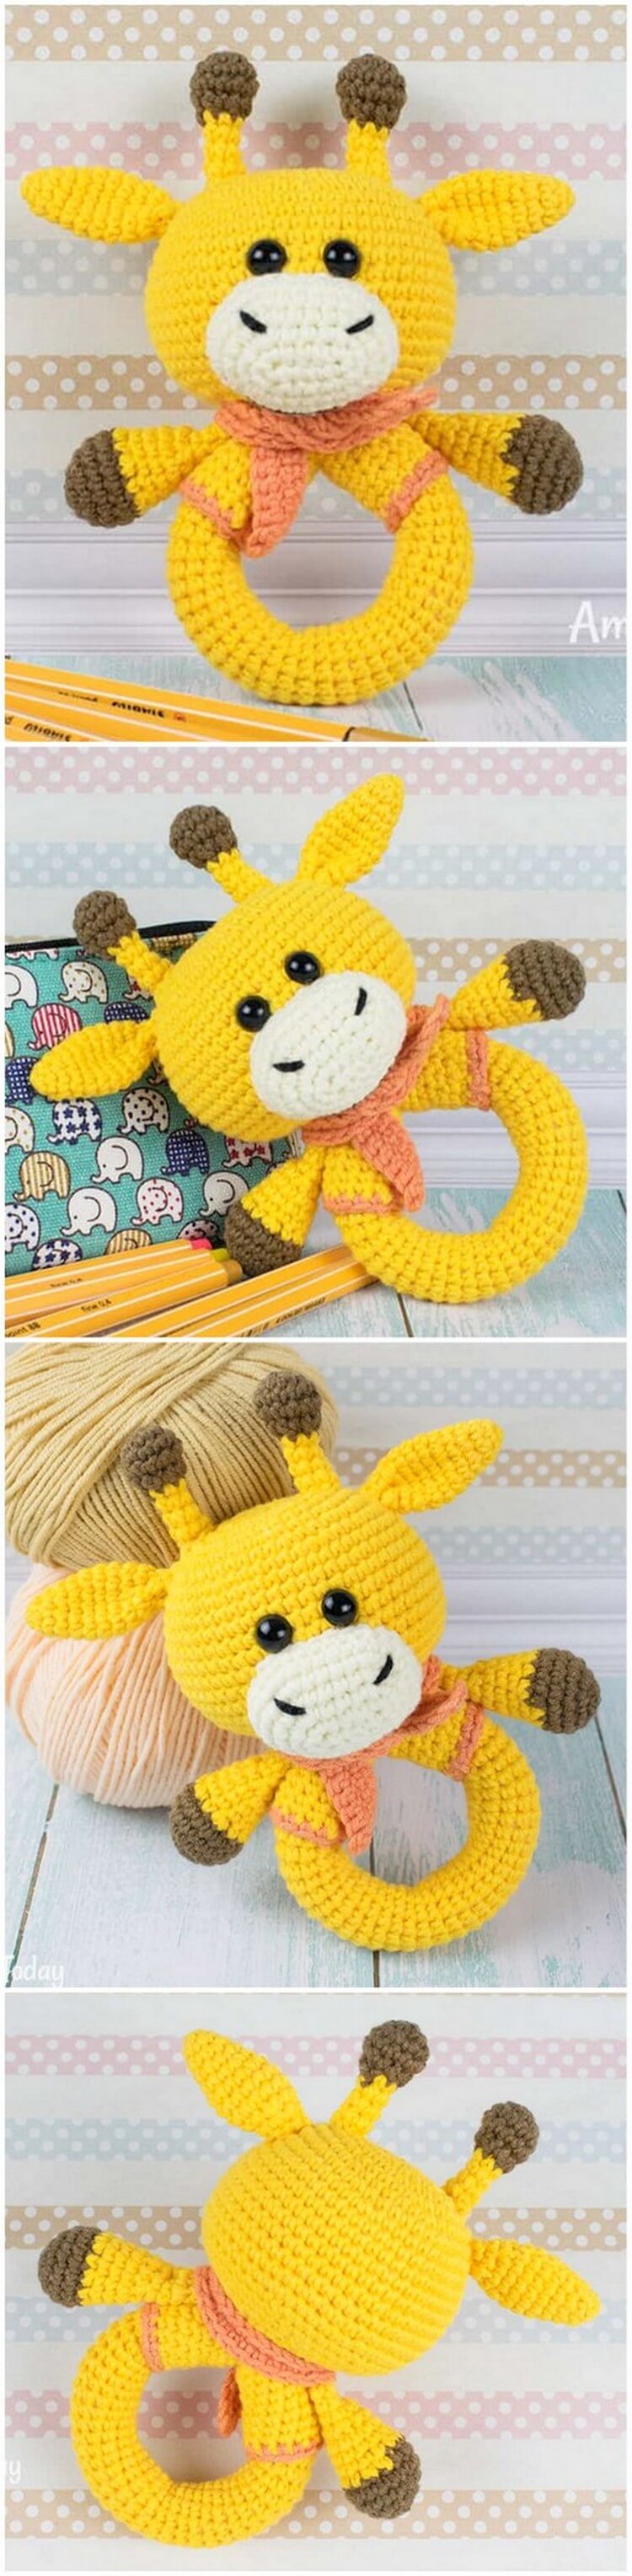 Crochet Amigurumi Pattern (49)